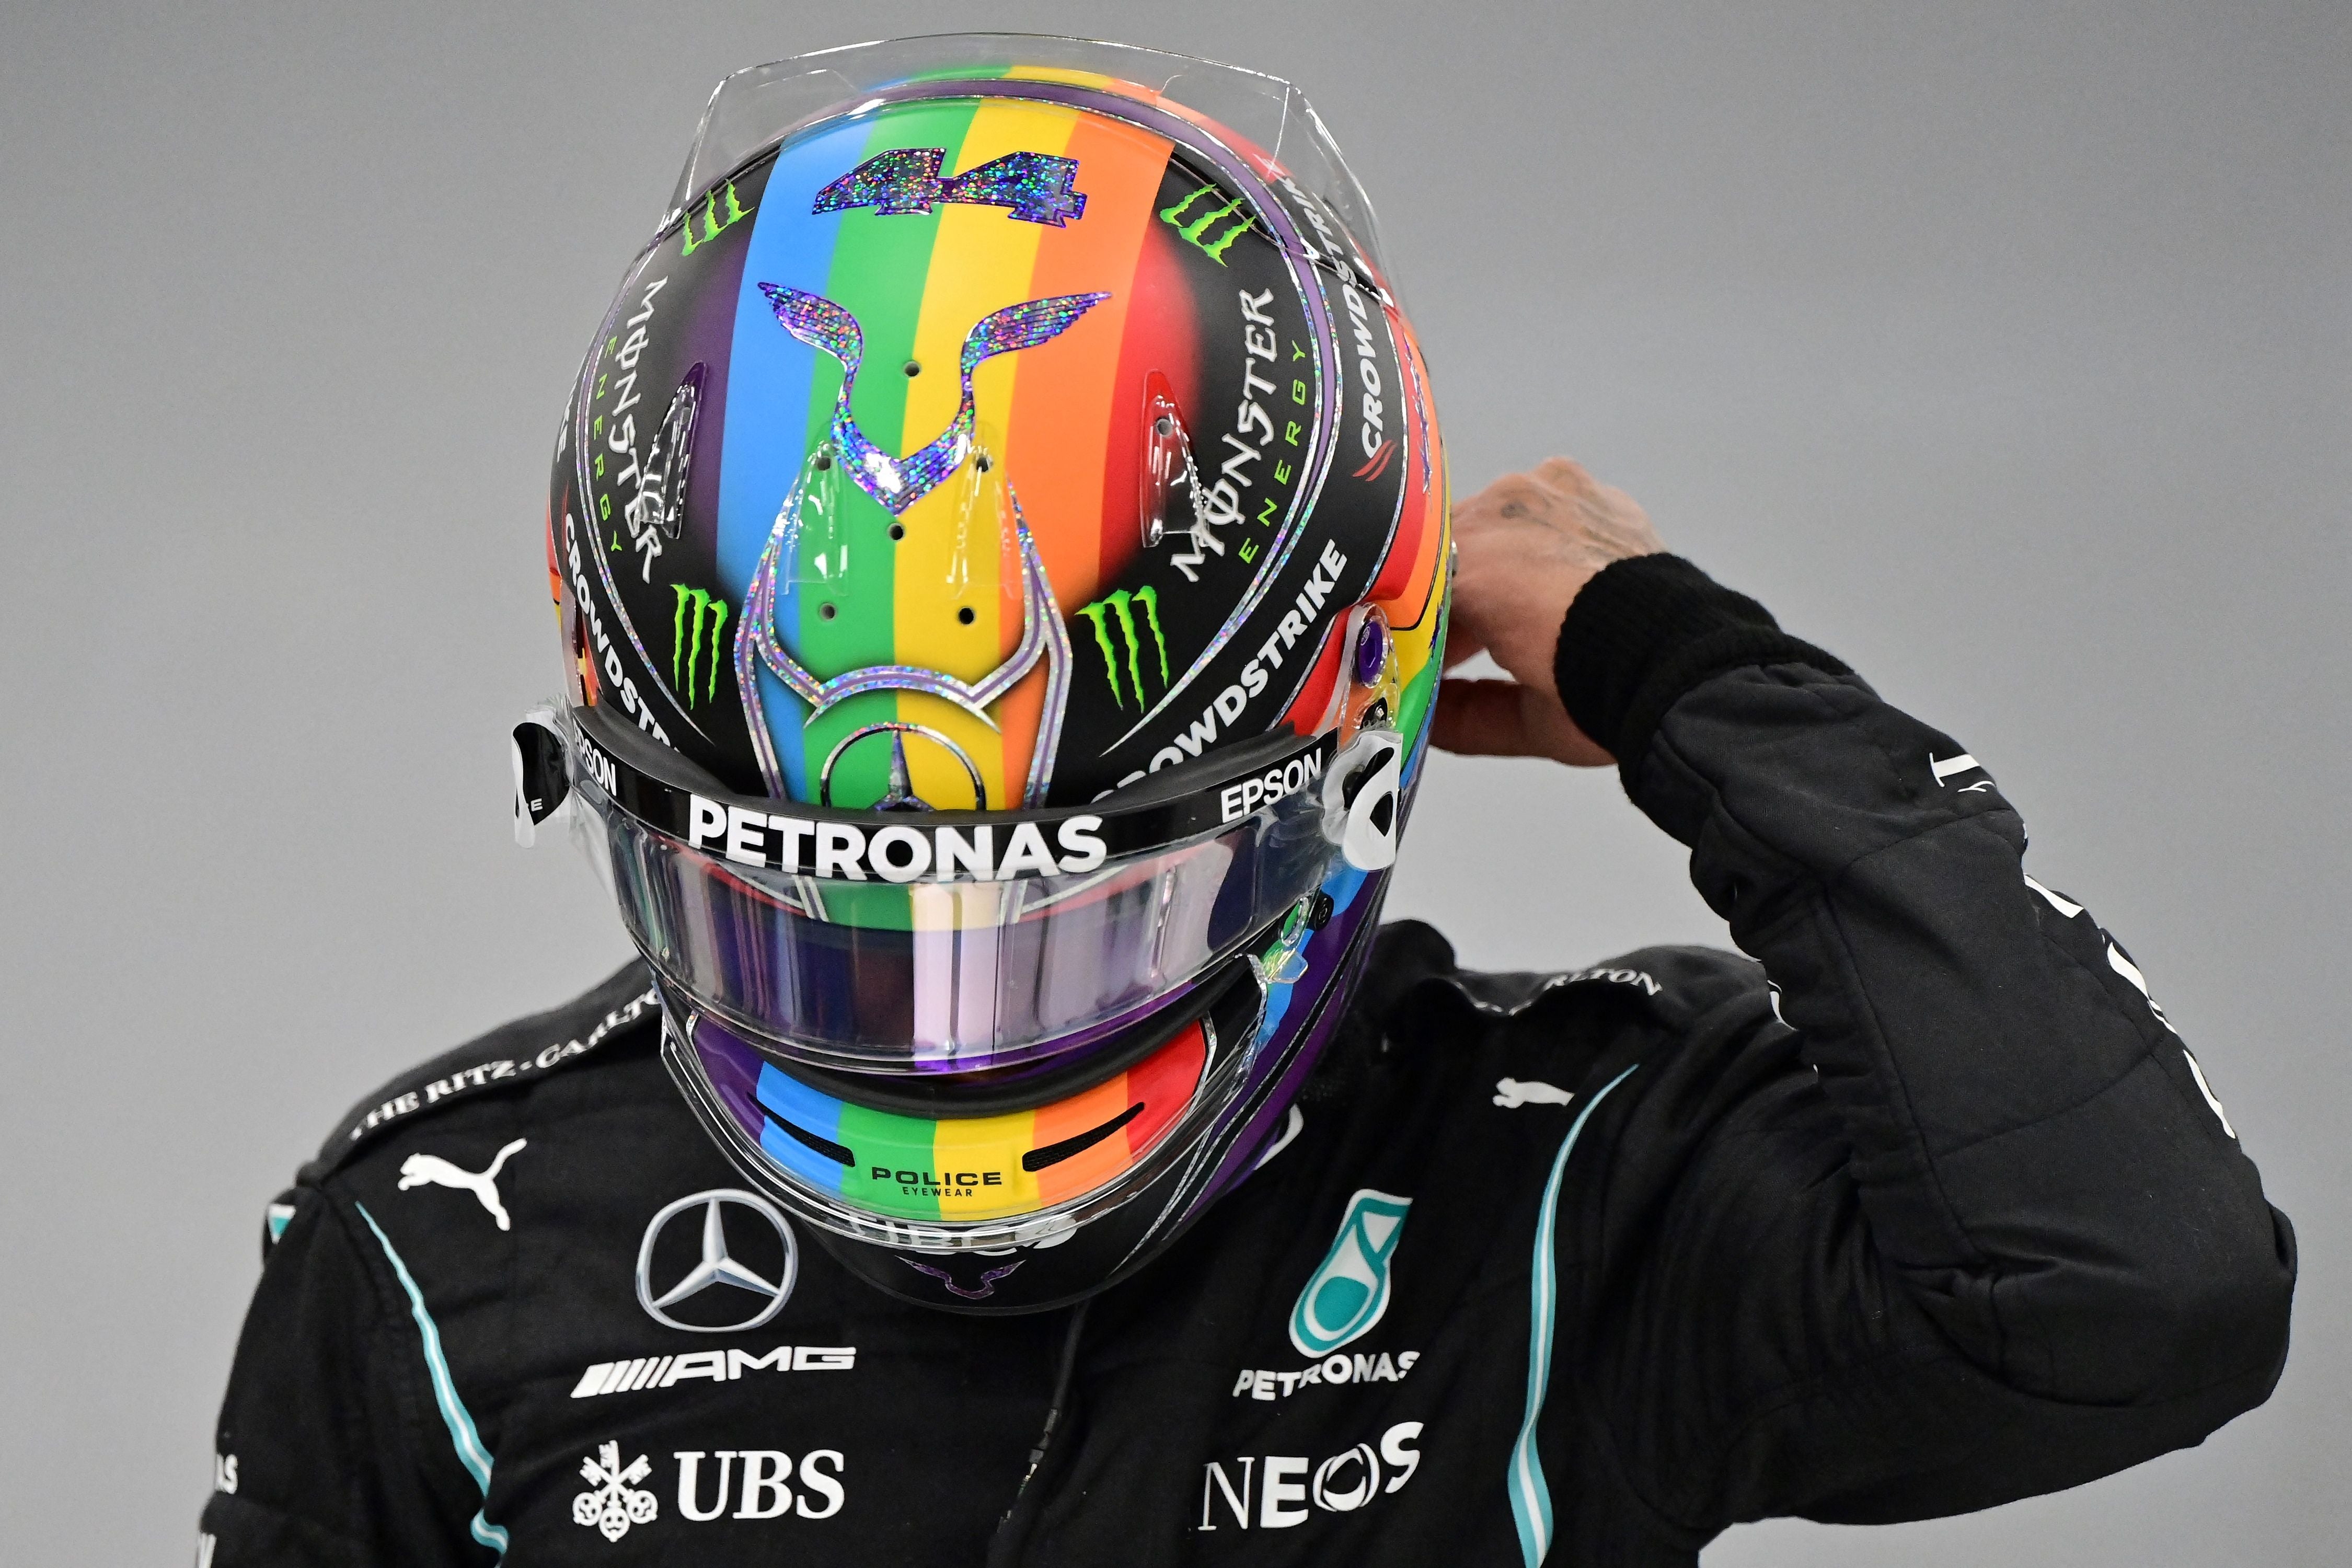 Lewis Hamilton wore a rainbow helmet in Saudi Arabia in 2021